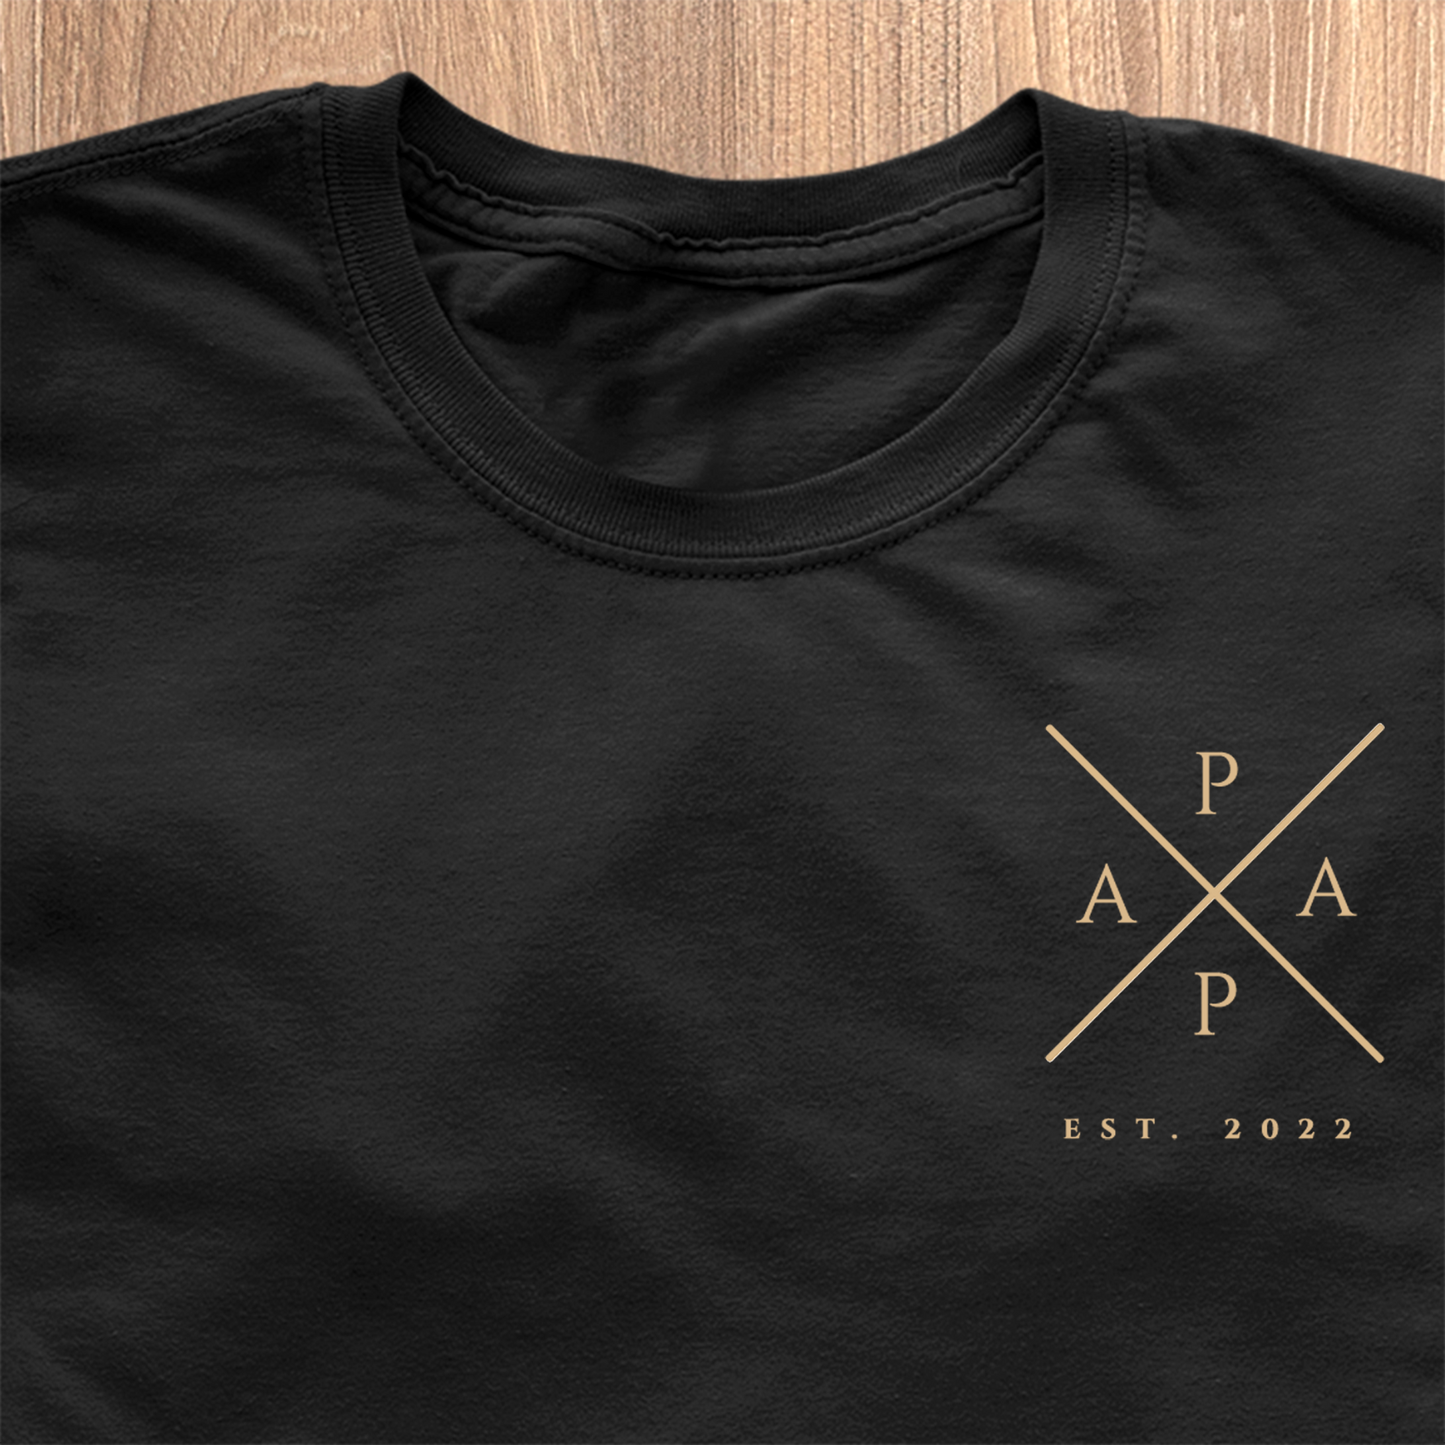 Camiseta Papa Cross - Fecha en Personalizar